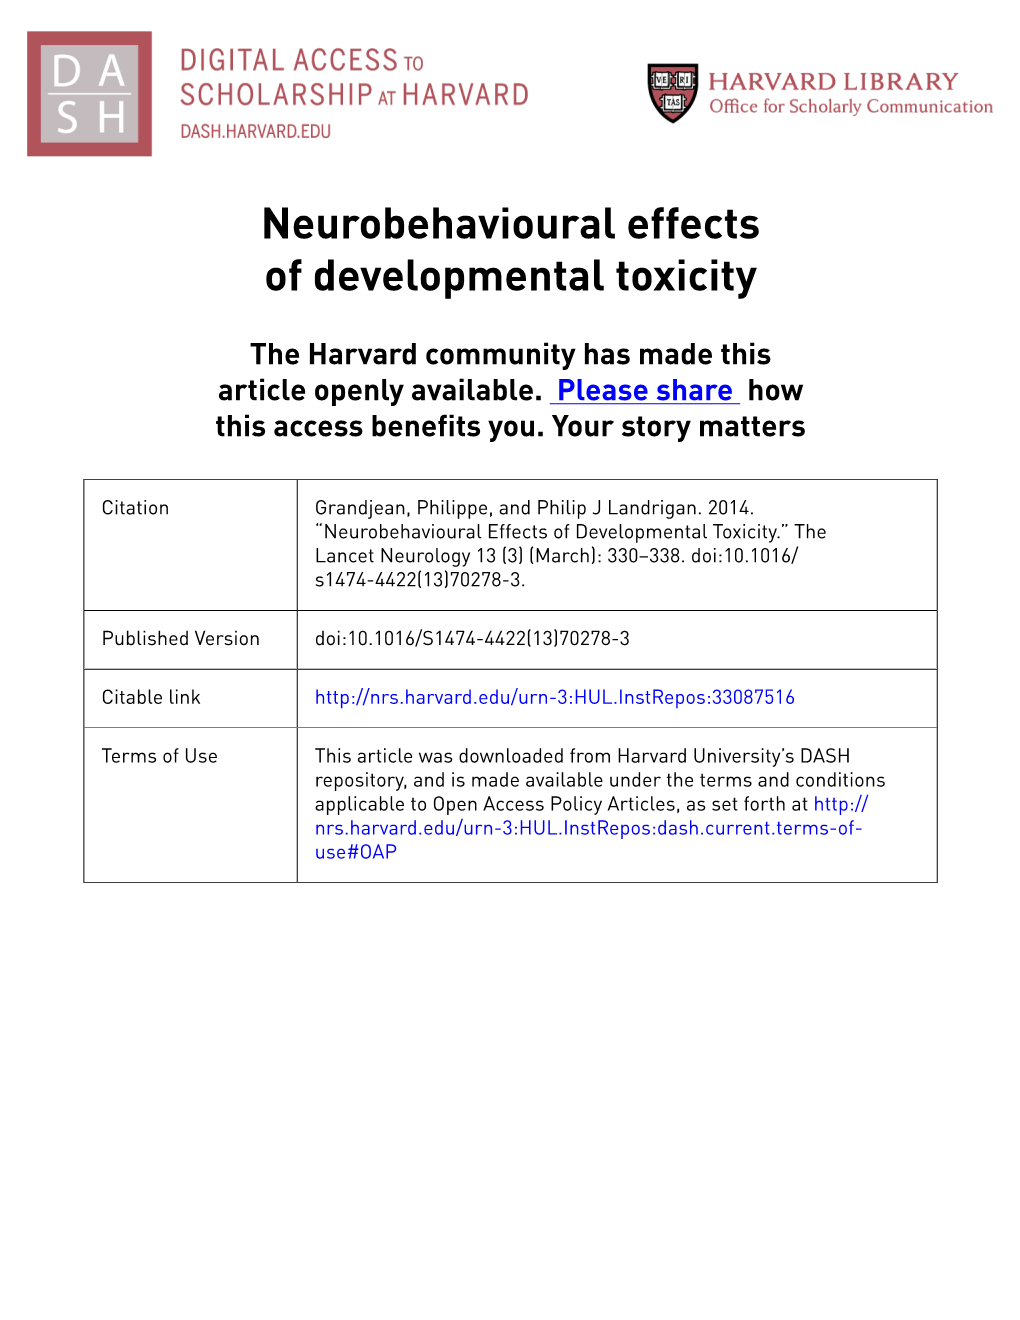 Neurobehavioural Effects of Developmental Toxicity